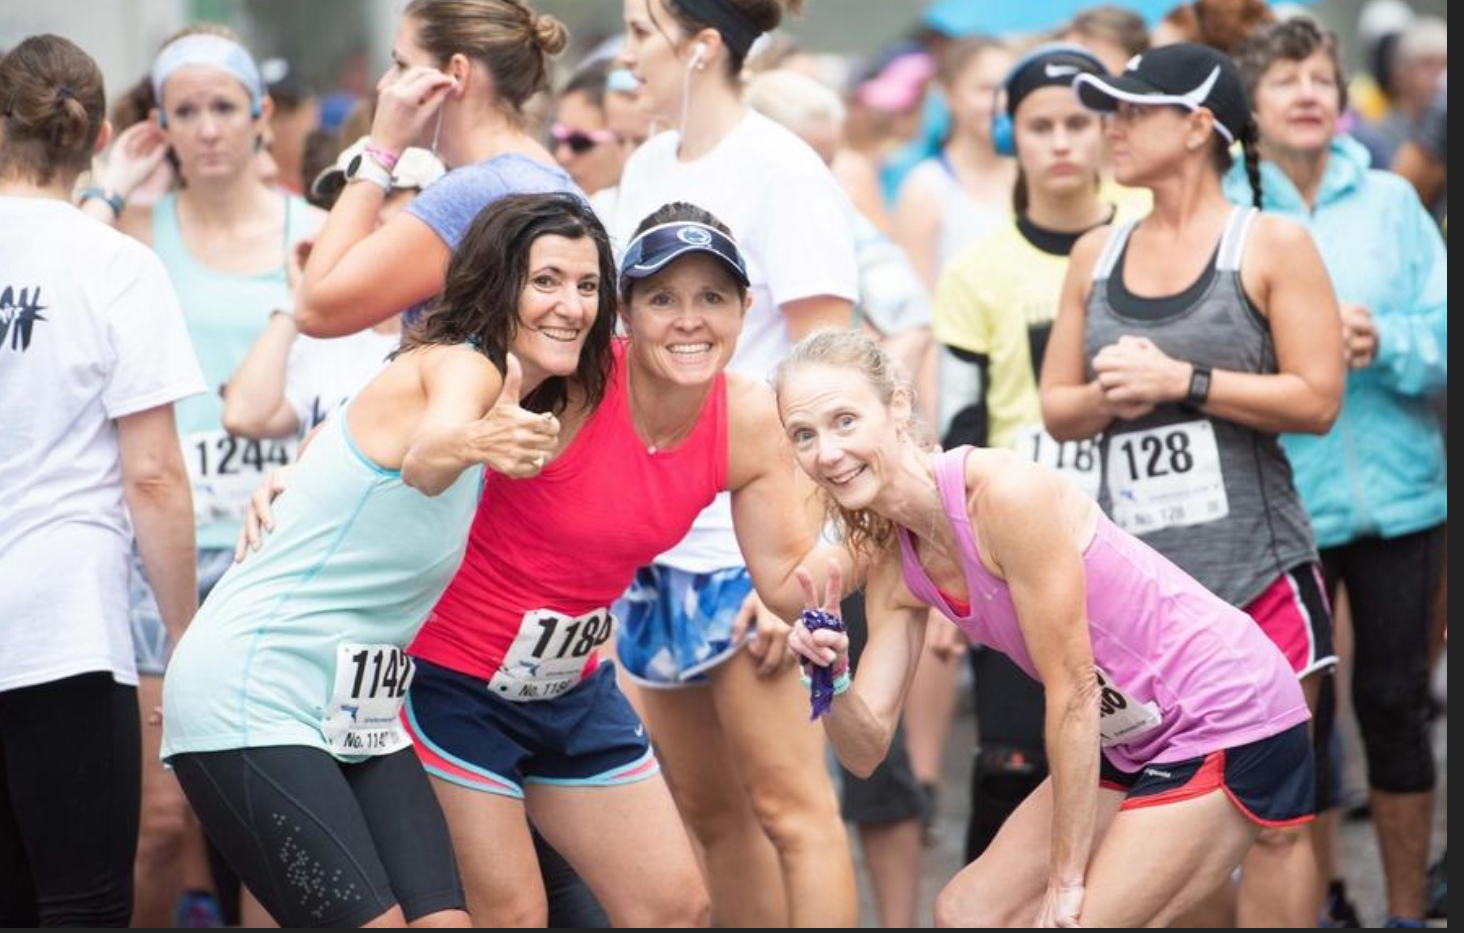 Run for Women 5K at Penn State Behrend